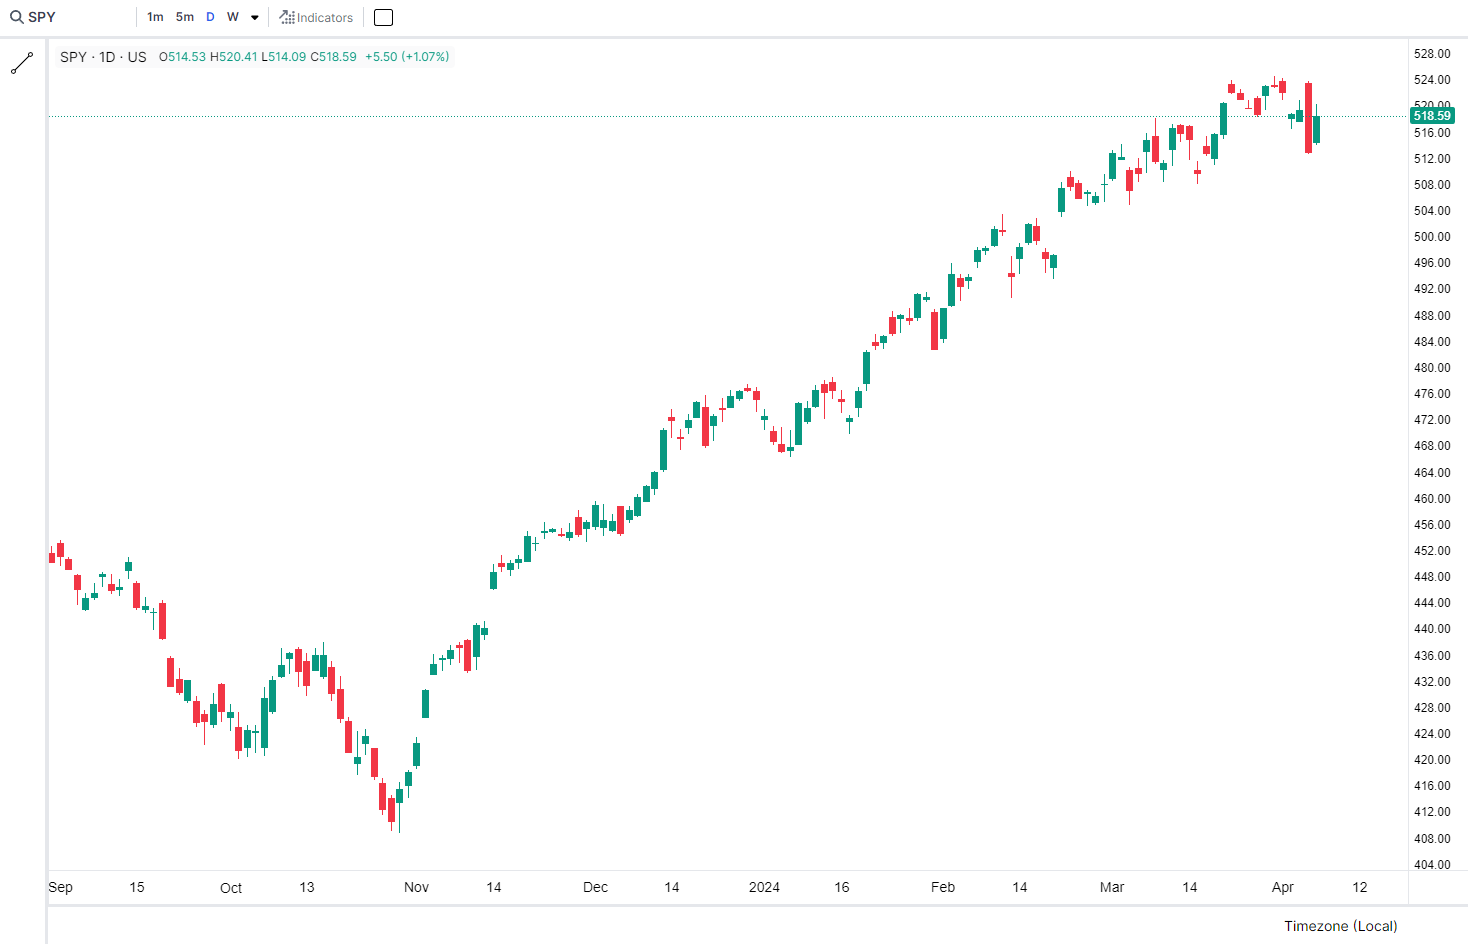 Graph showing market volatility